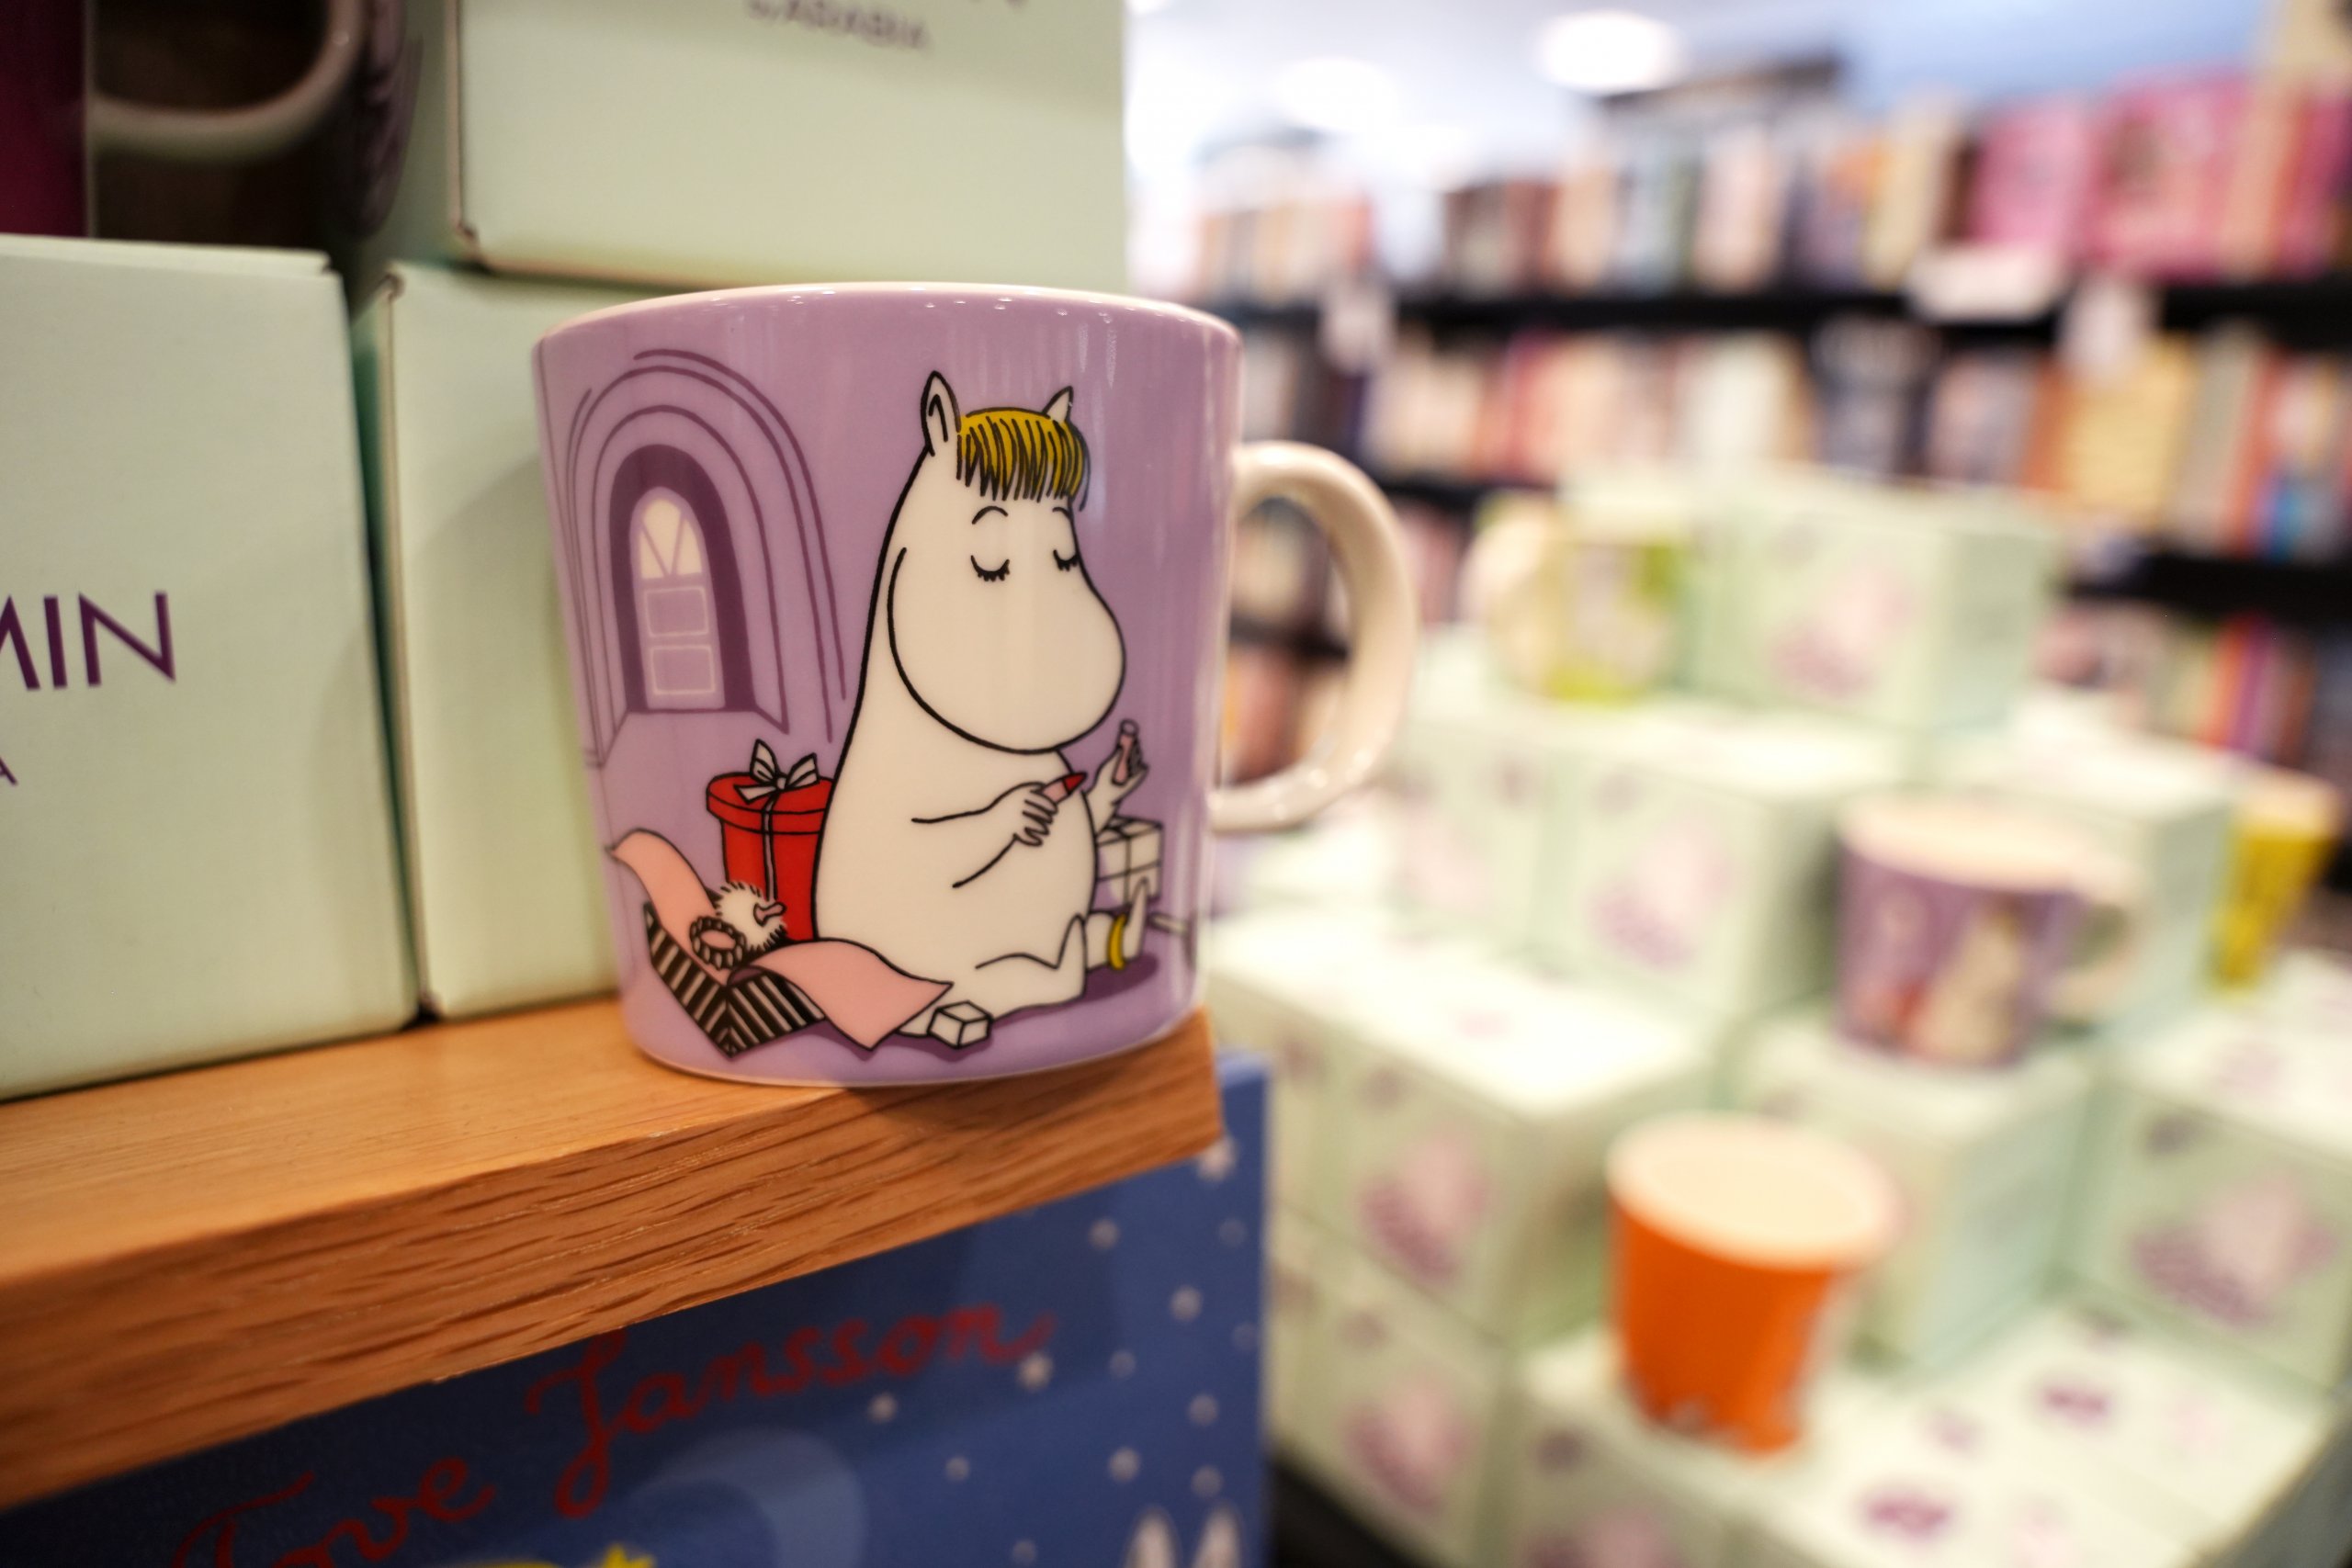 Moomins Debut As Daunt Returns Barnes & Noble To Former Markets